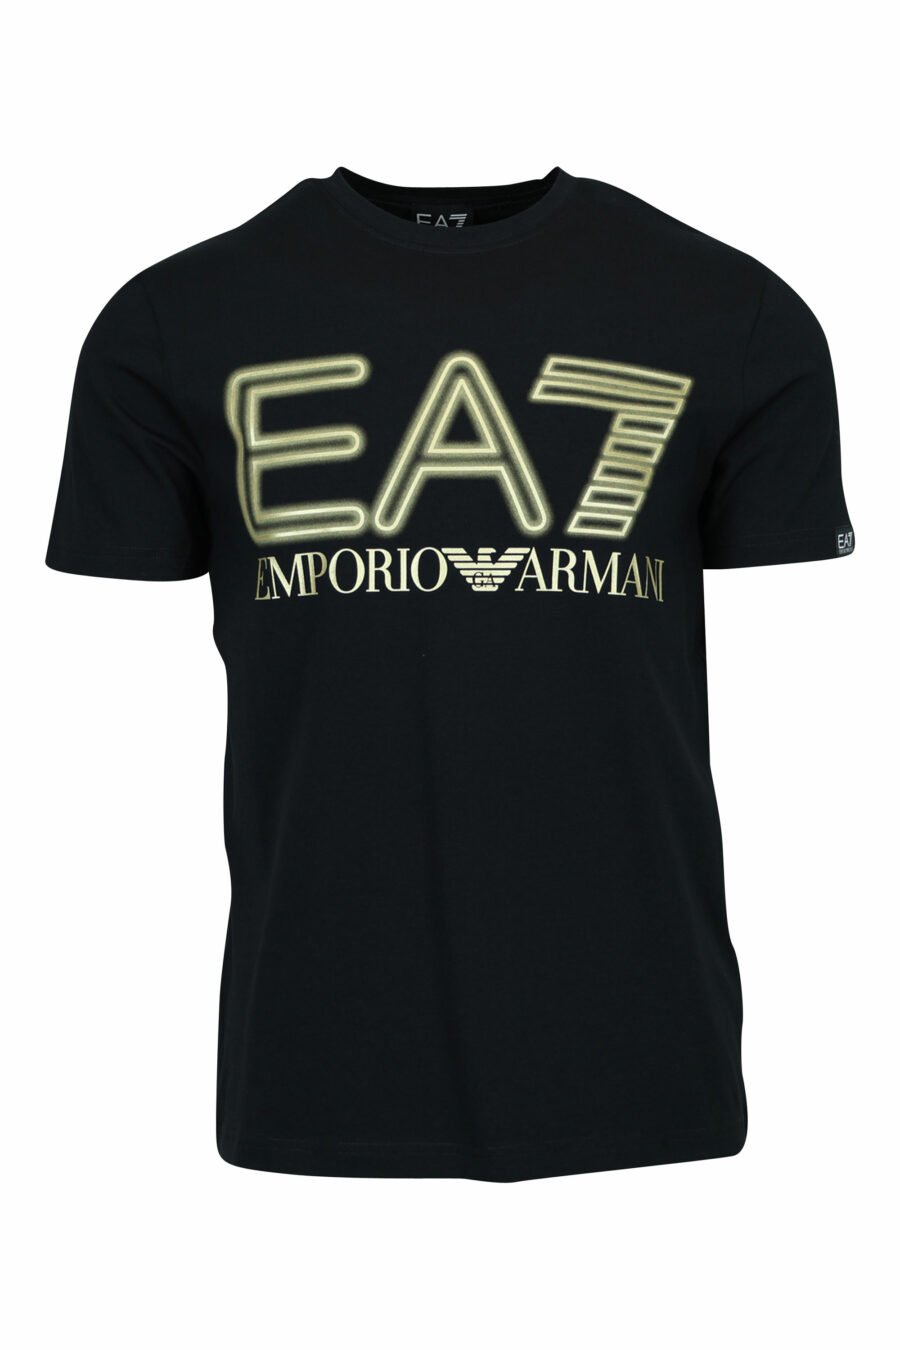 Schwarzes T-Shirt mit neongoldenem "lux identity" Maxilogo - 8057970672234